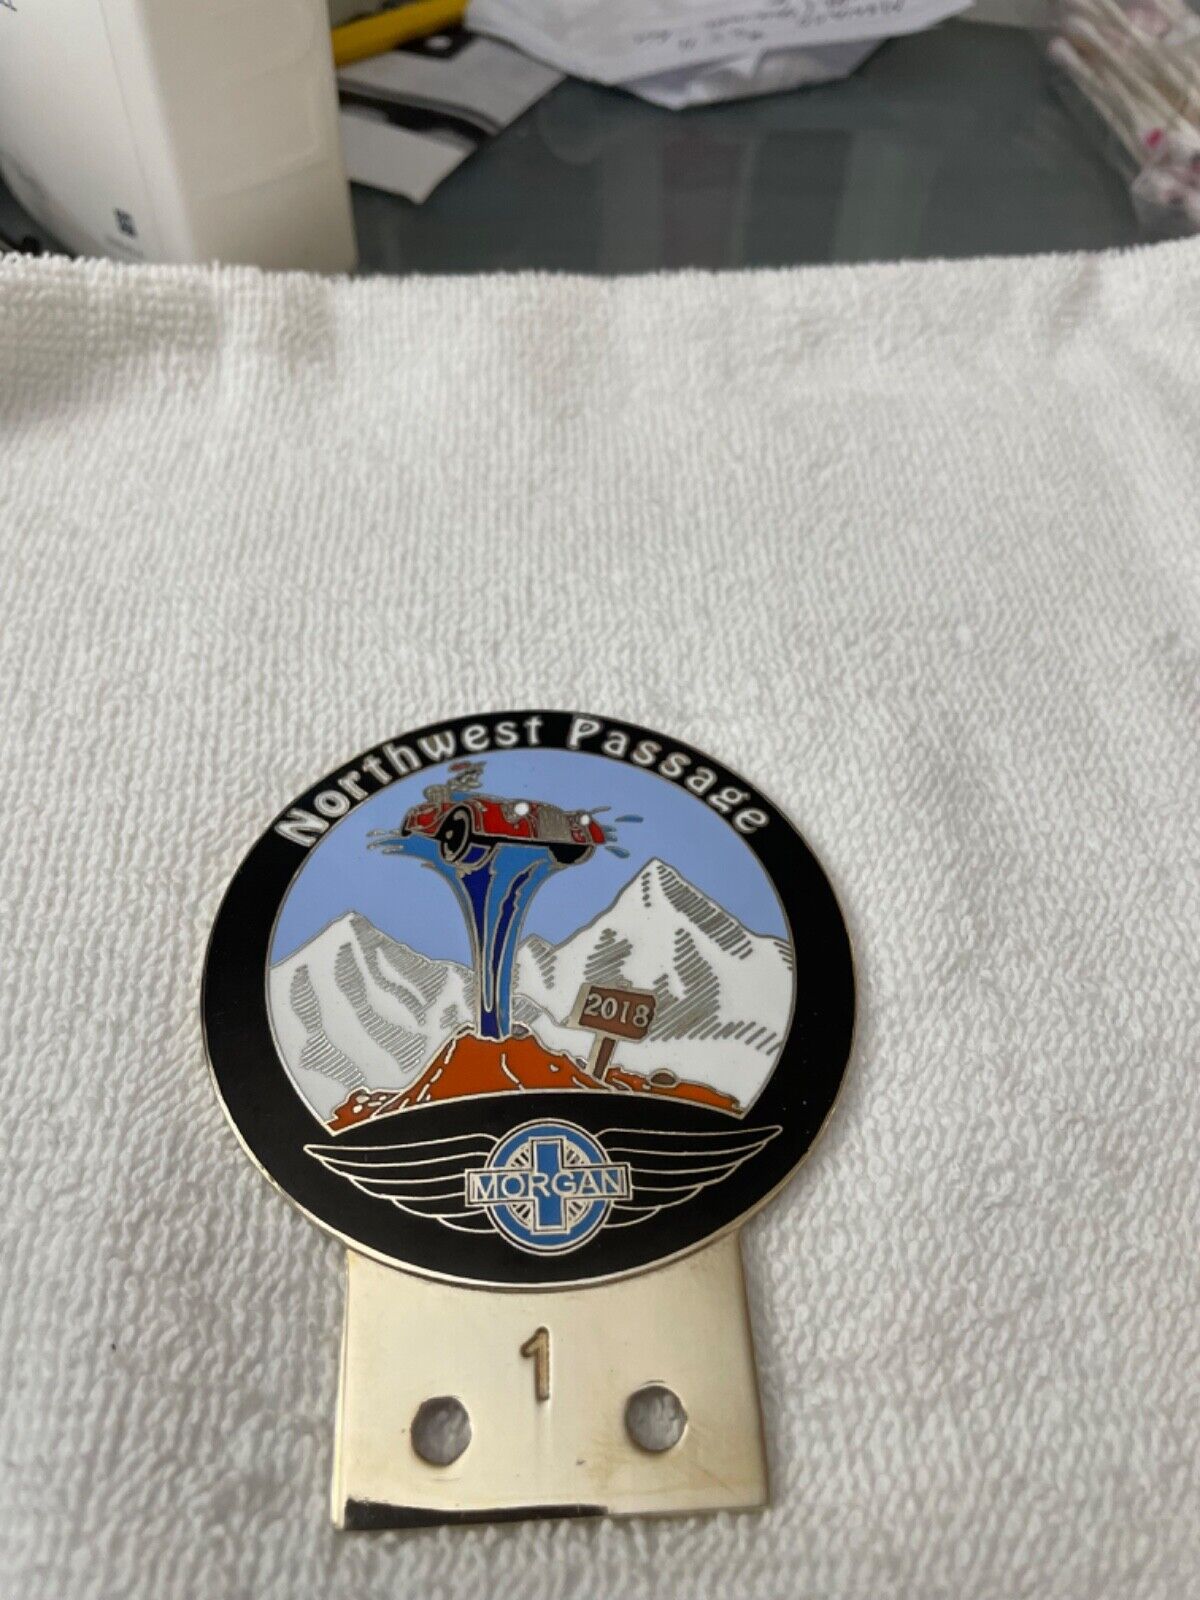 Morgan Northwest Passage Badge